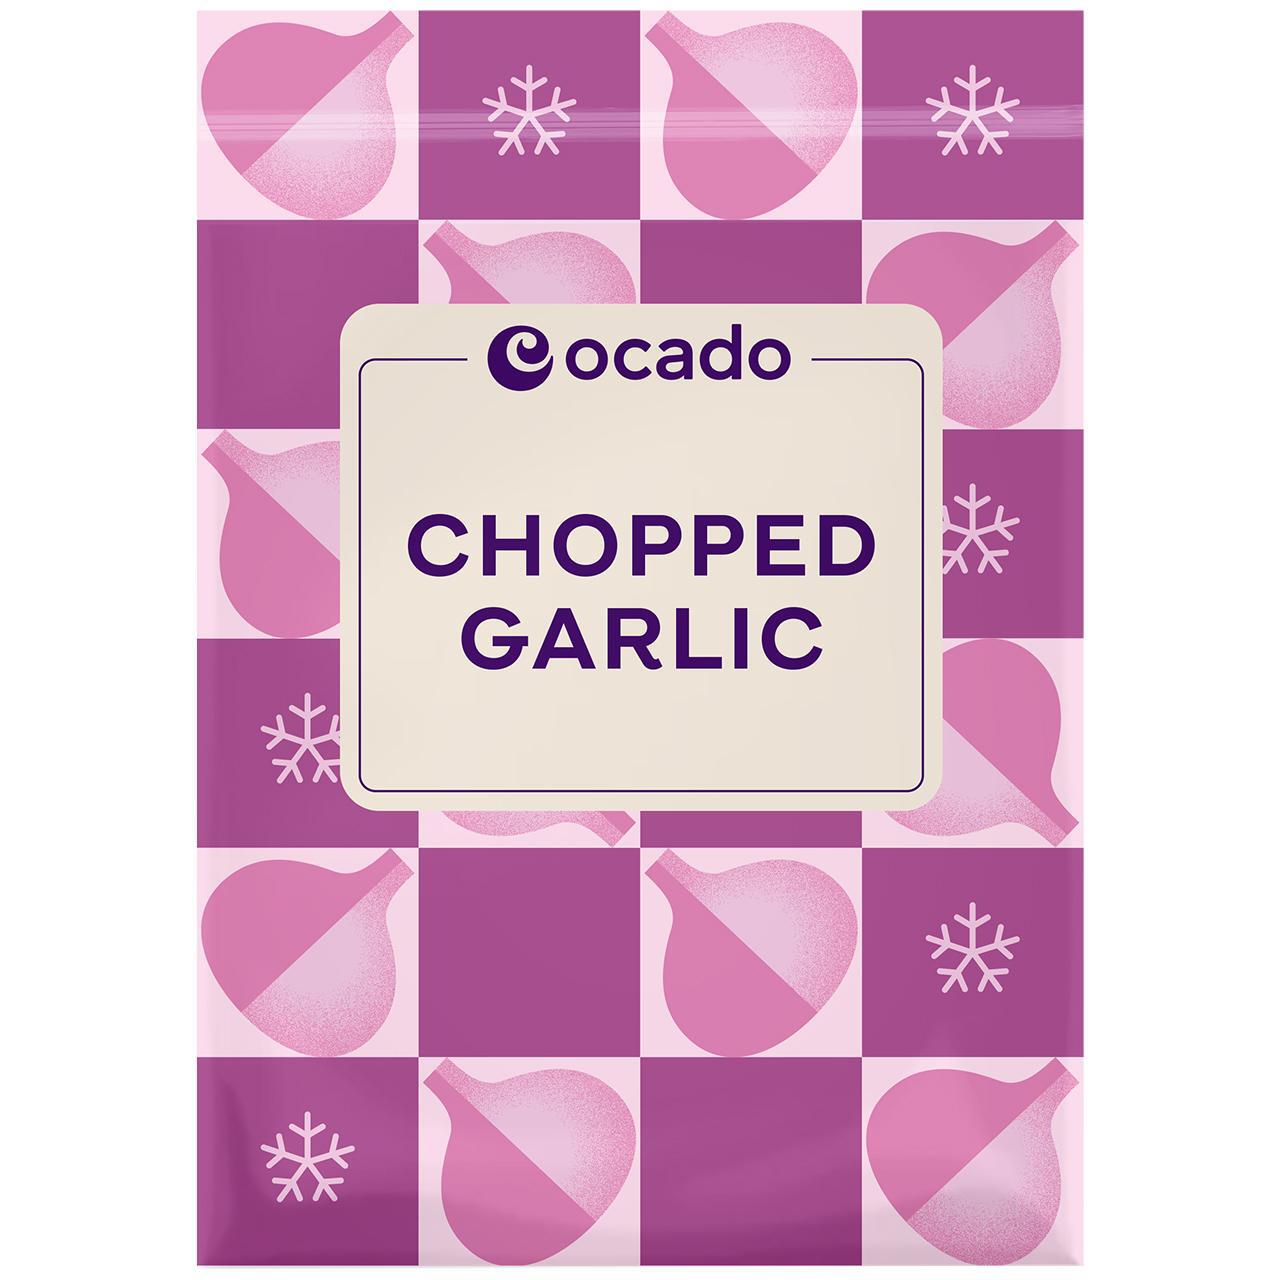 Ocado Frozen Chopped Garlic 100g